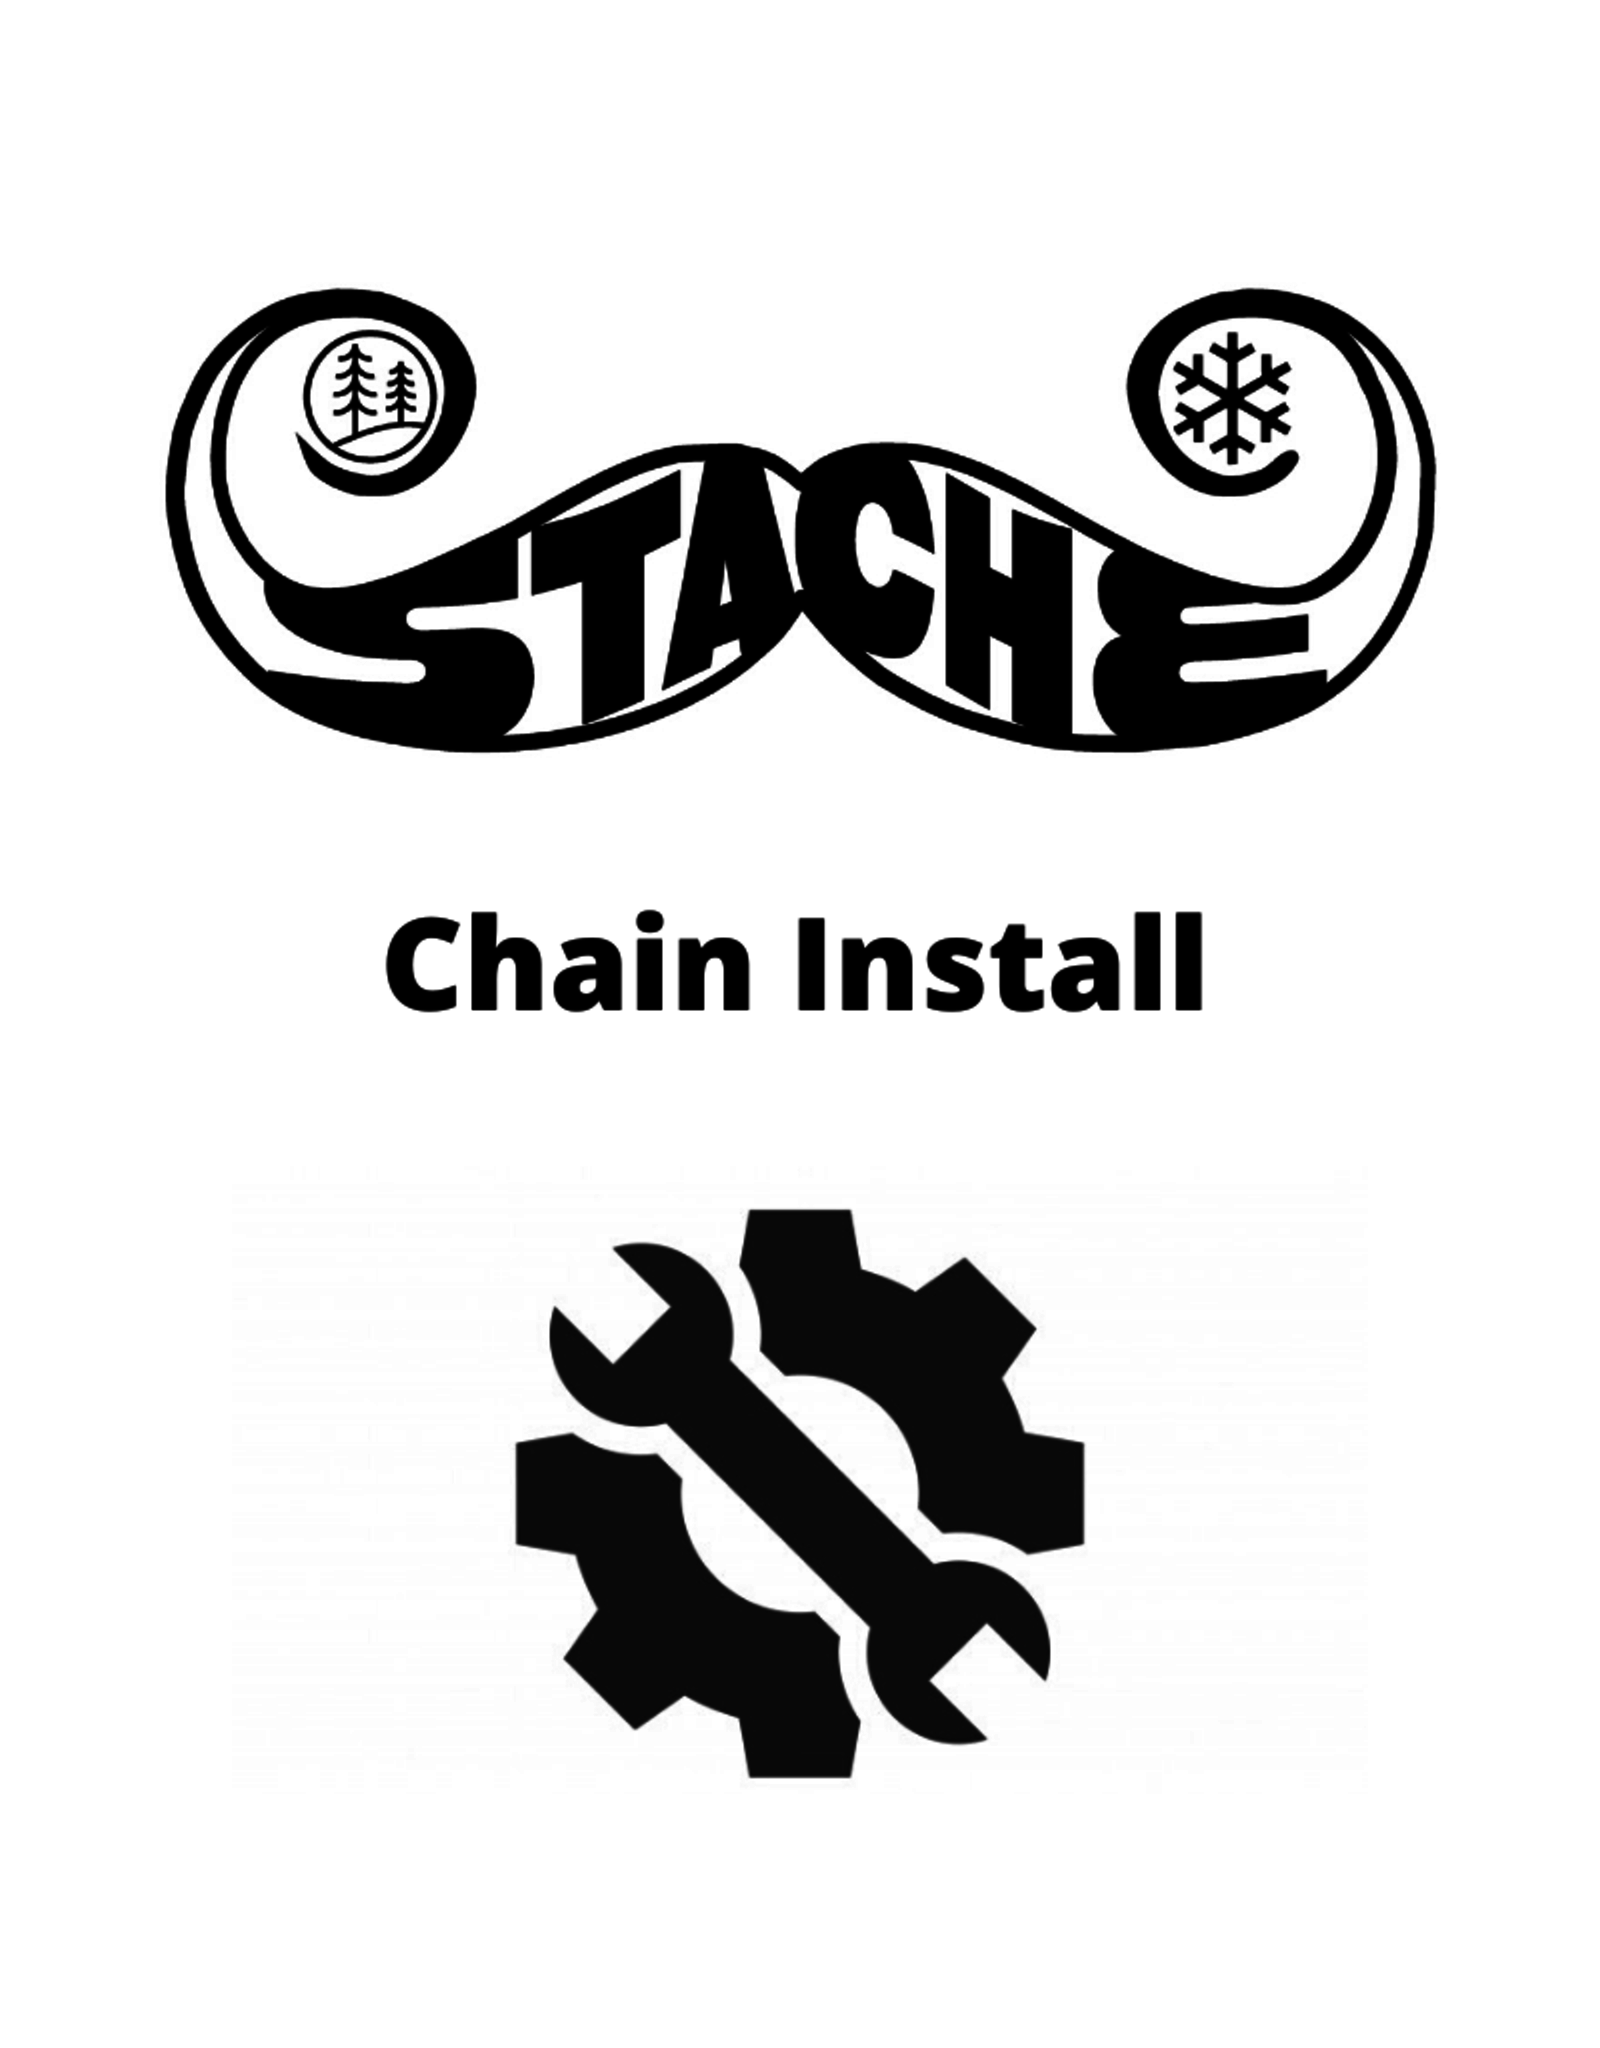 Chain Install